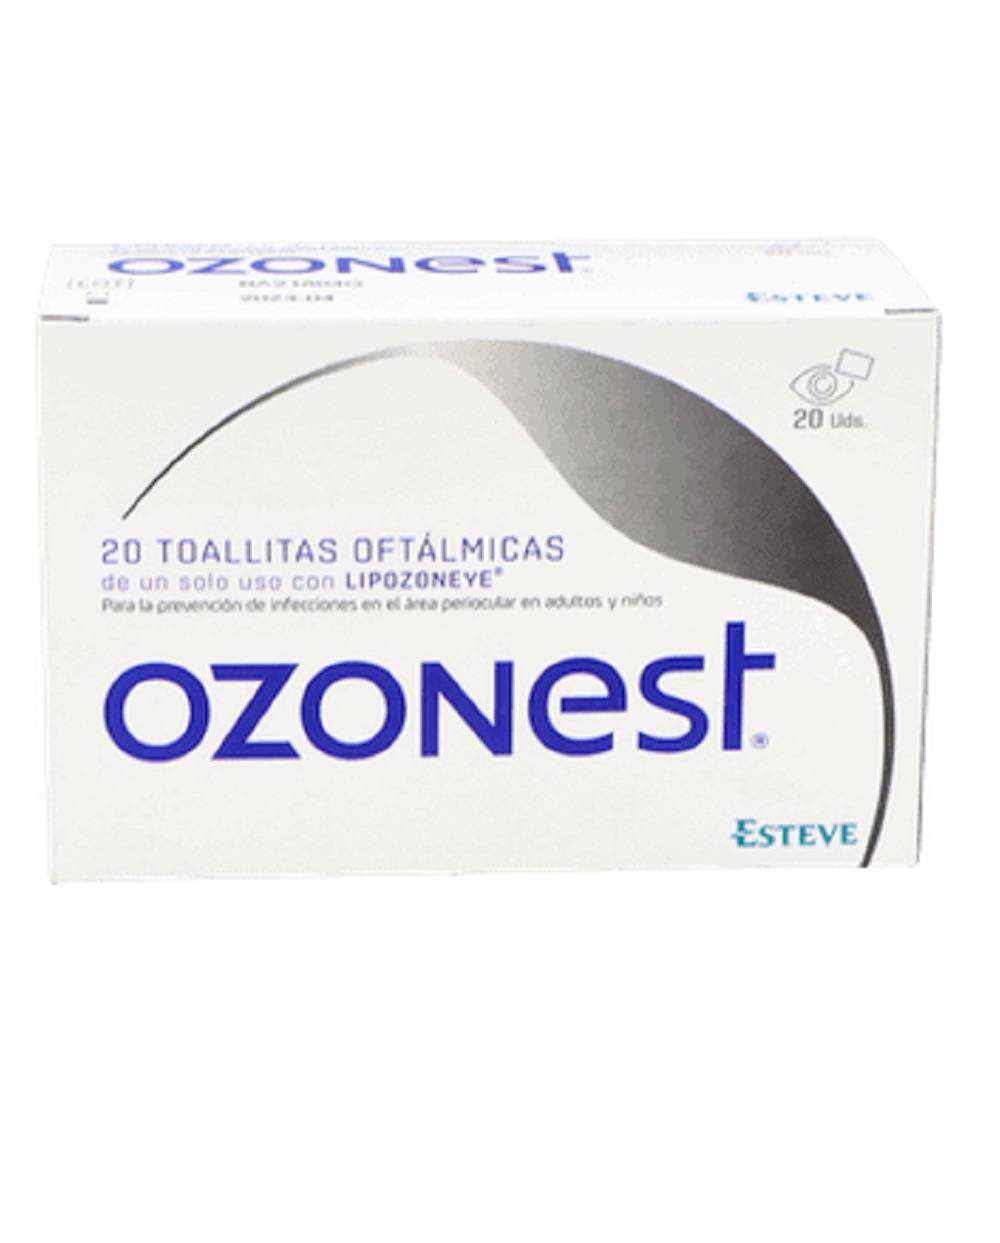 OZONEST - 20 TOALLITAS OFTÁLMICAS - Higiene ocular